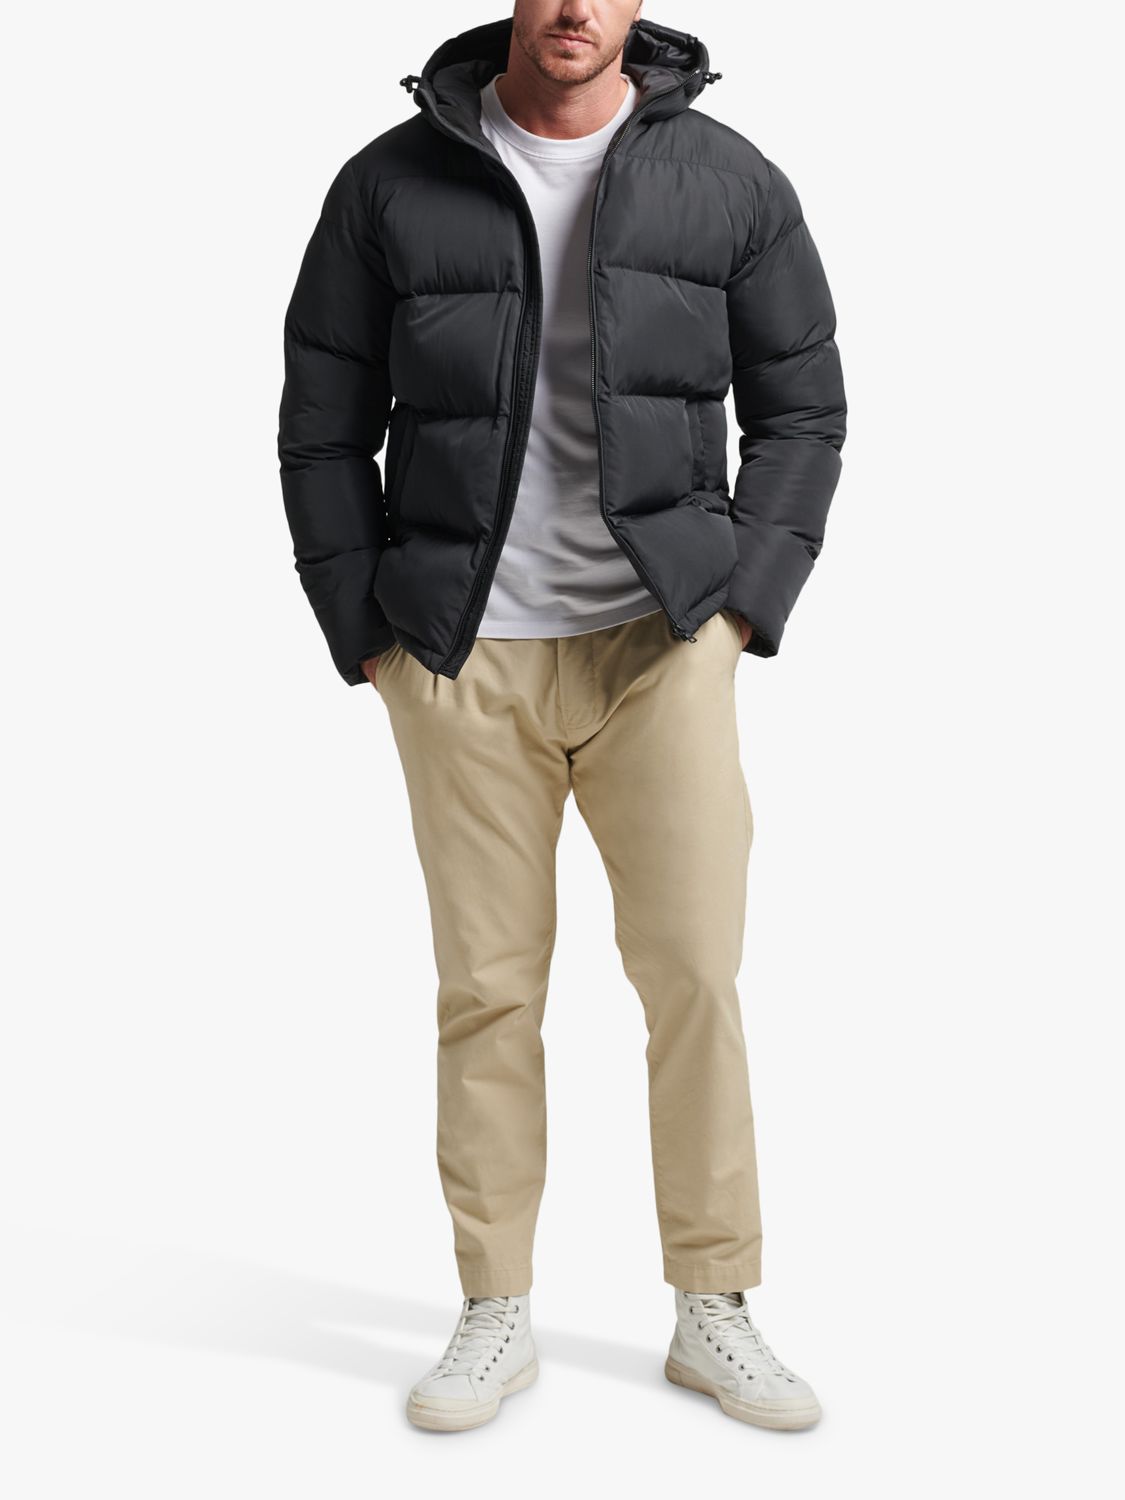 Superdry Short Hooded Puffer Jacket, Black at John Lewis & Partners